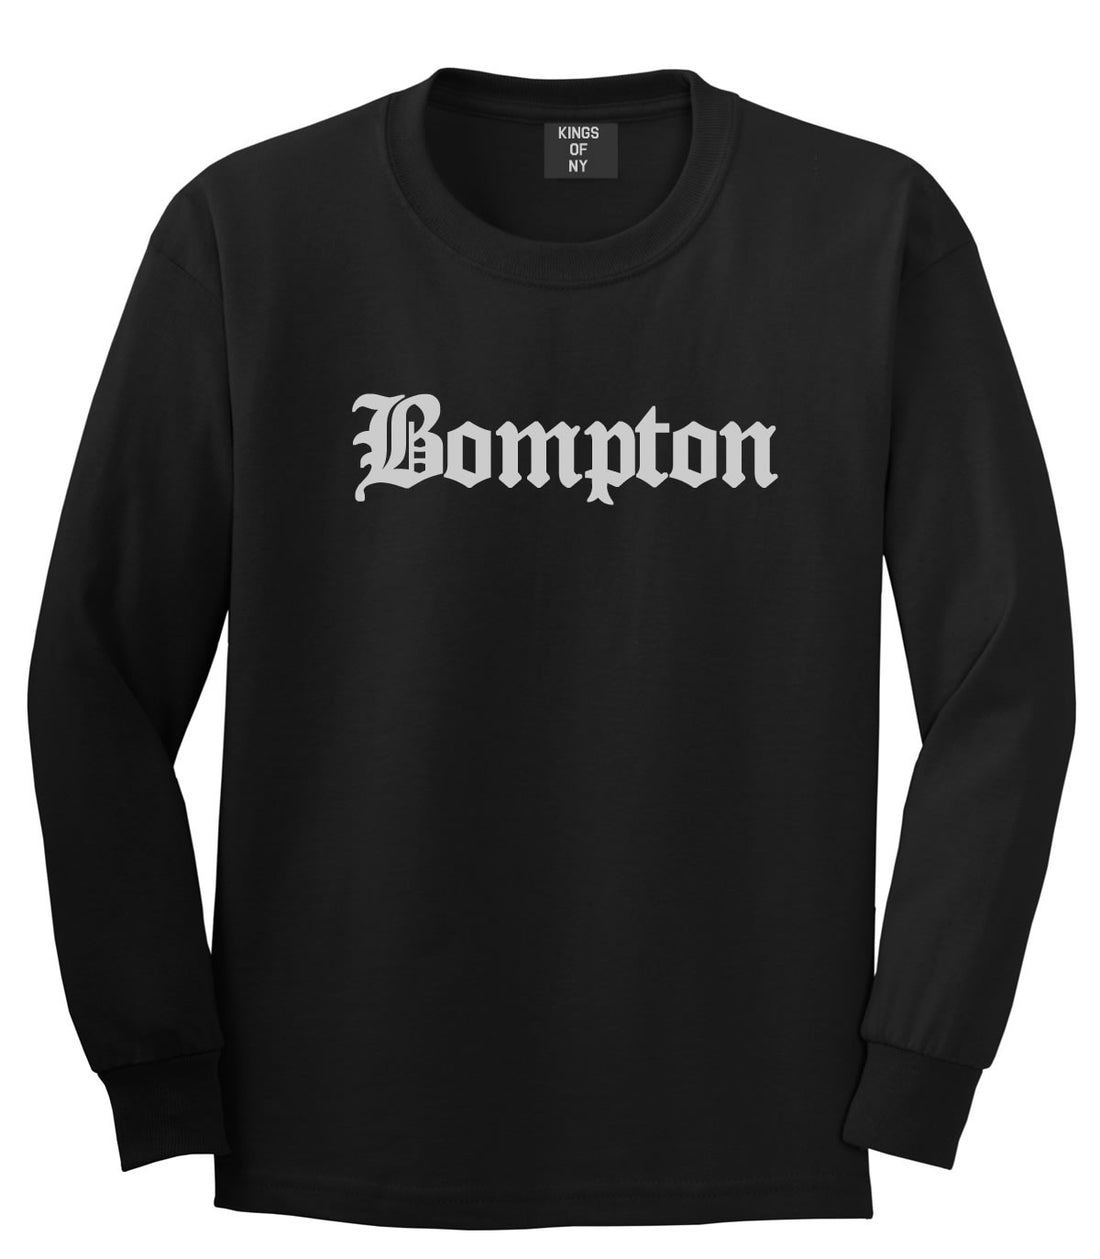 Bompton Long Sleeve T-Shirt